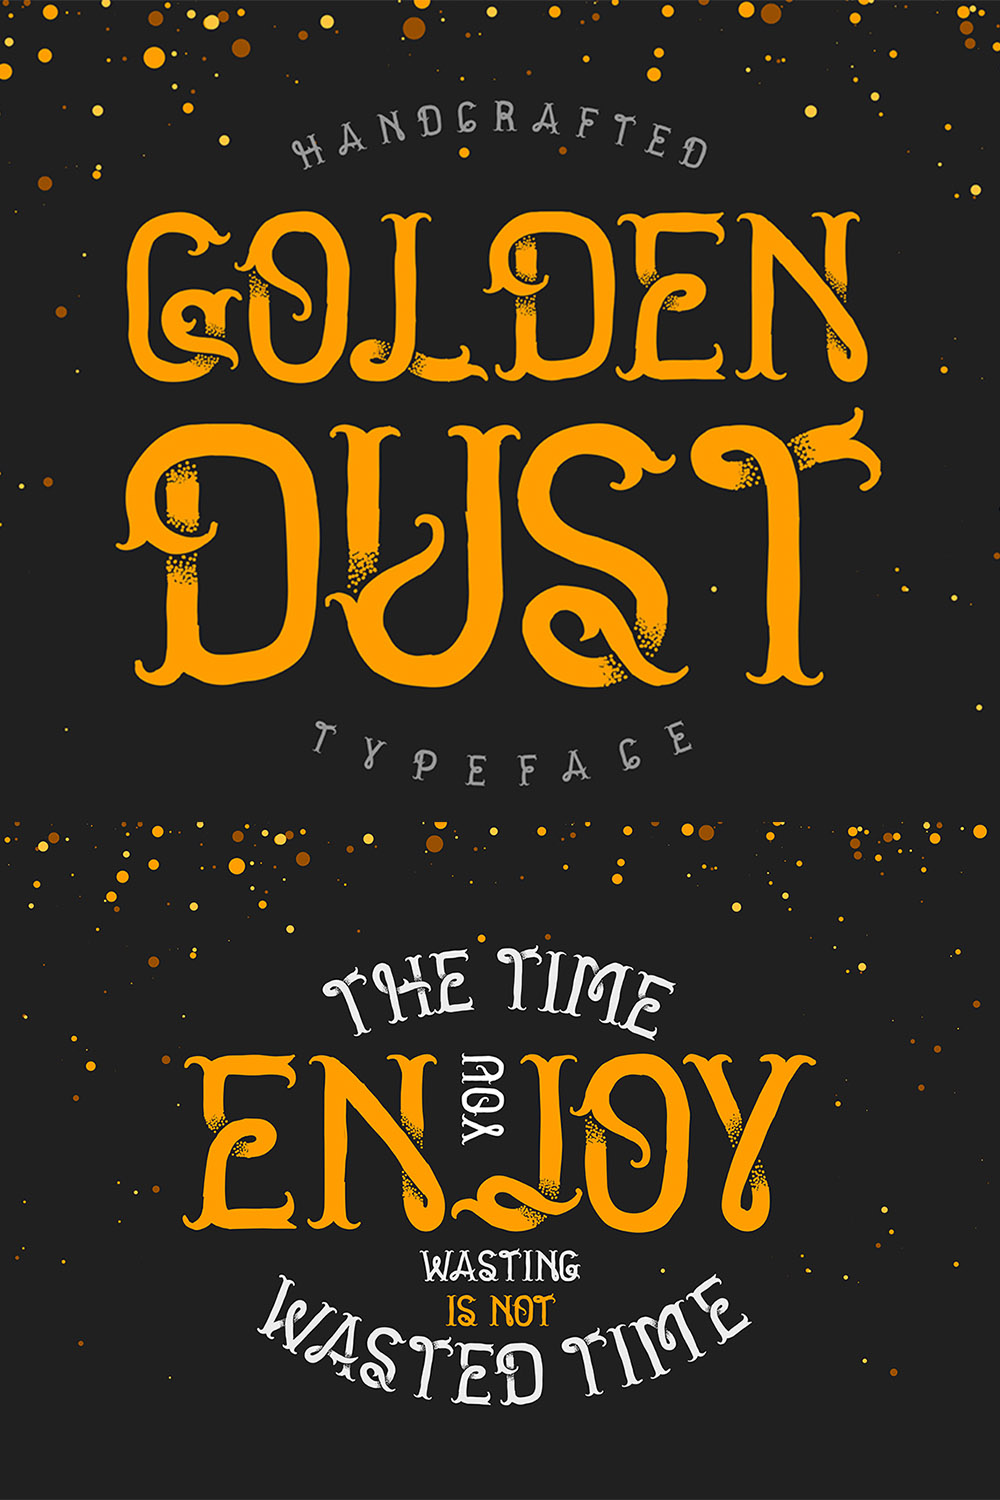 Golden Dust Typeface Design pinterest image.